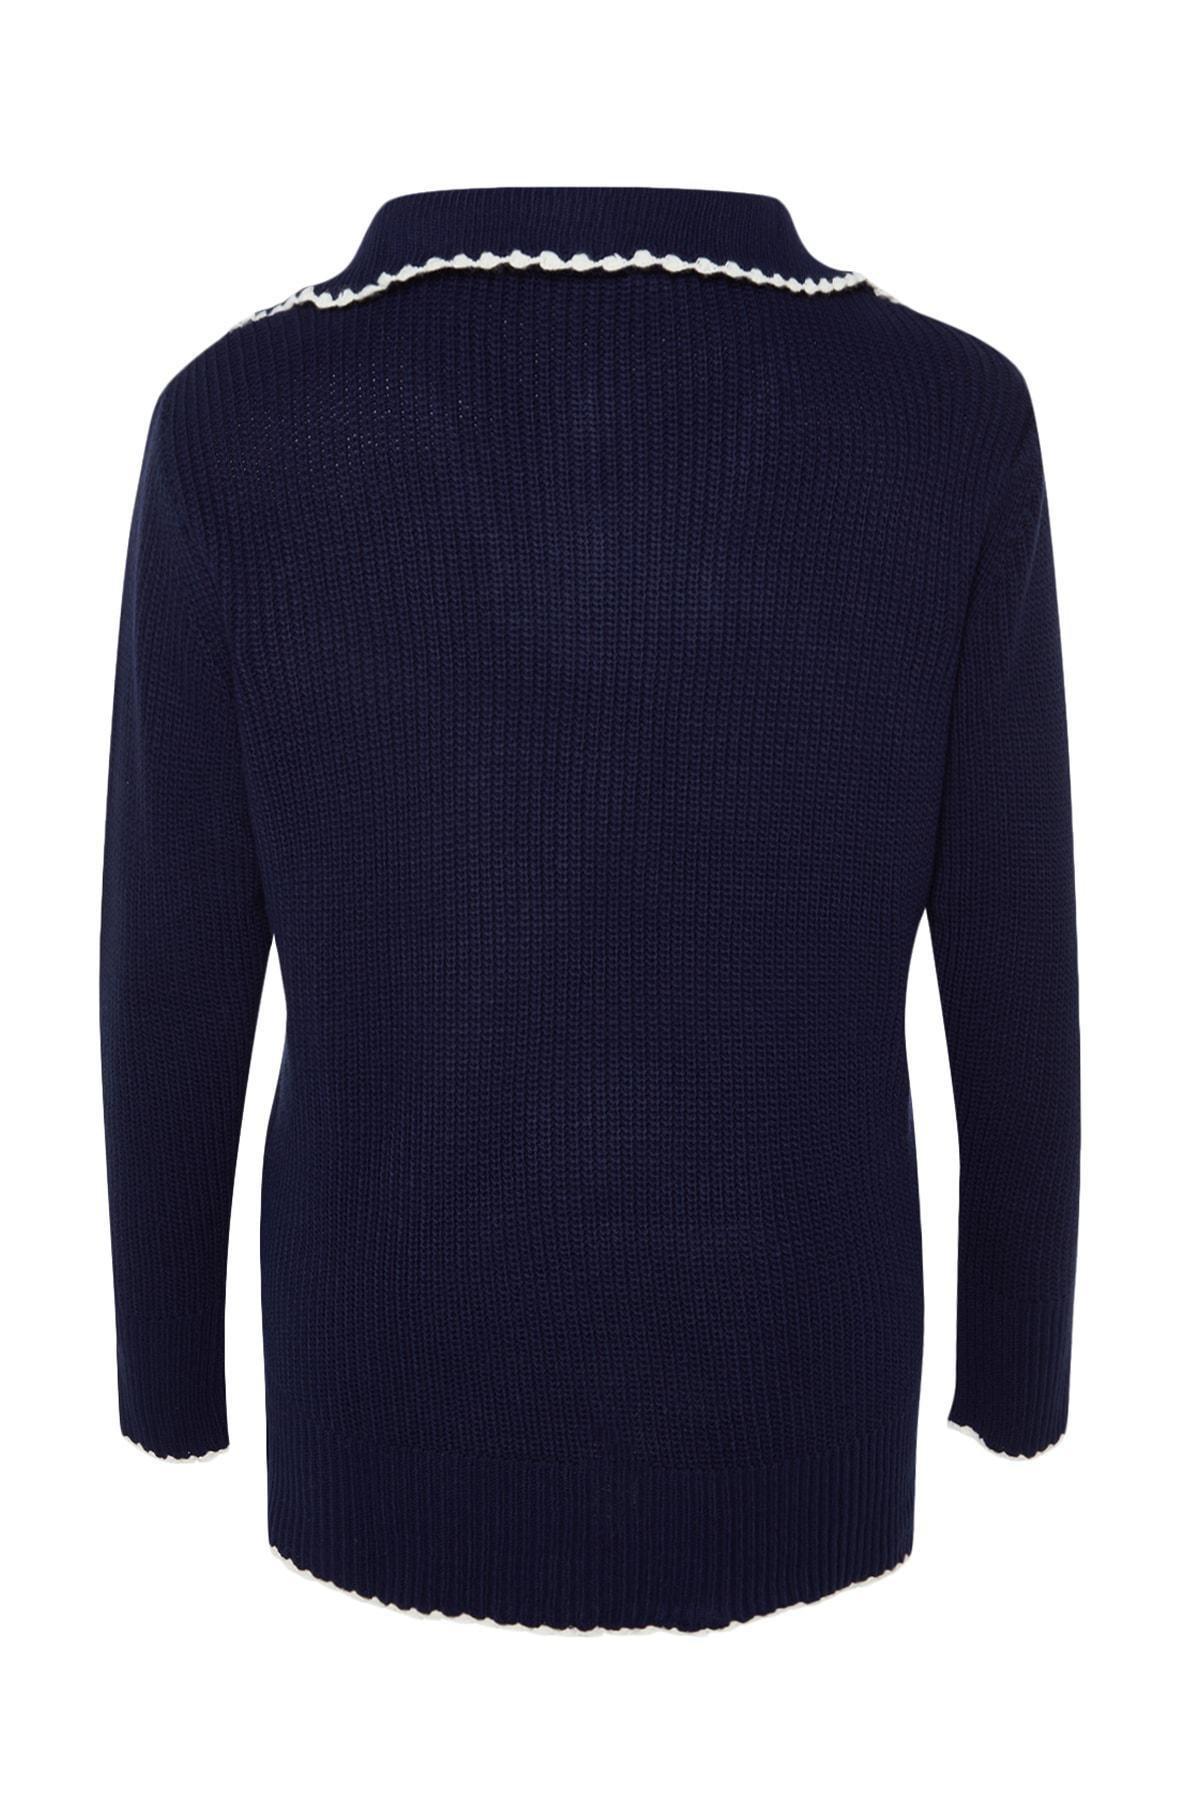 Trendyol - Navy Oversized Zippered Knitted Sweater